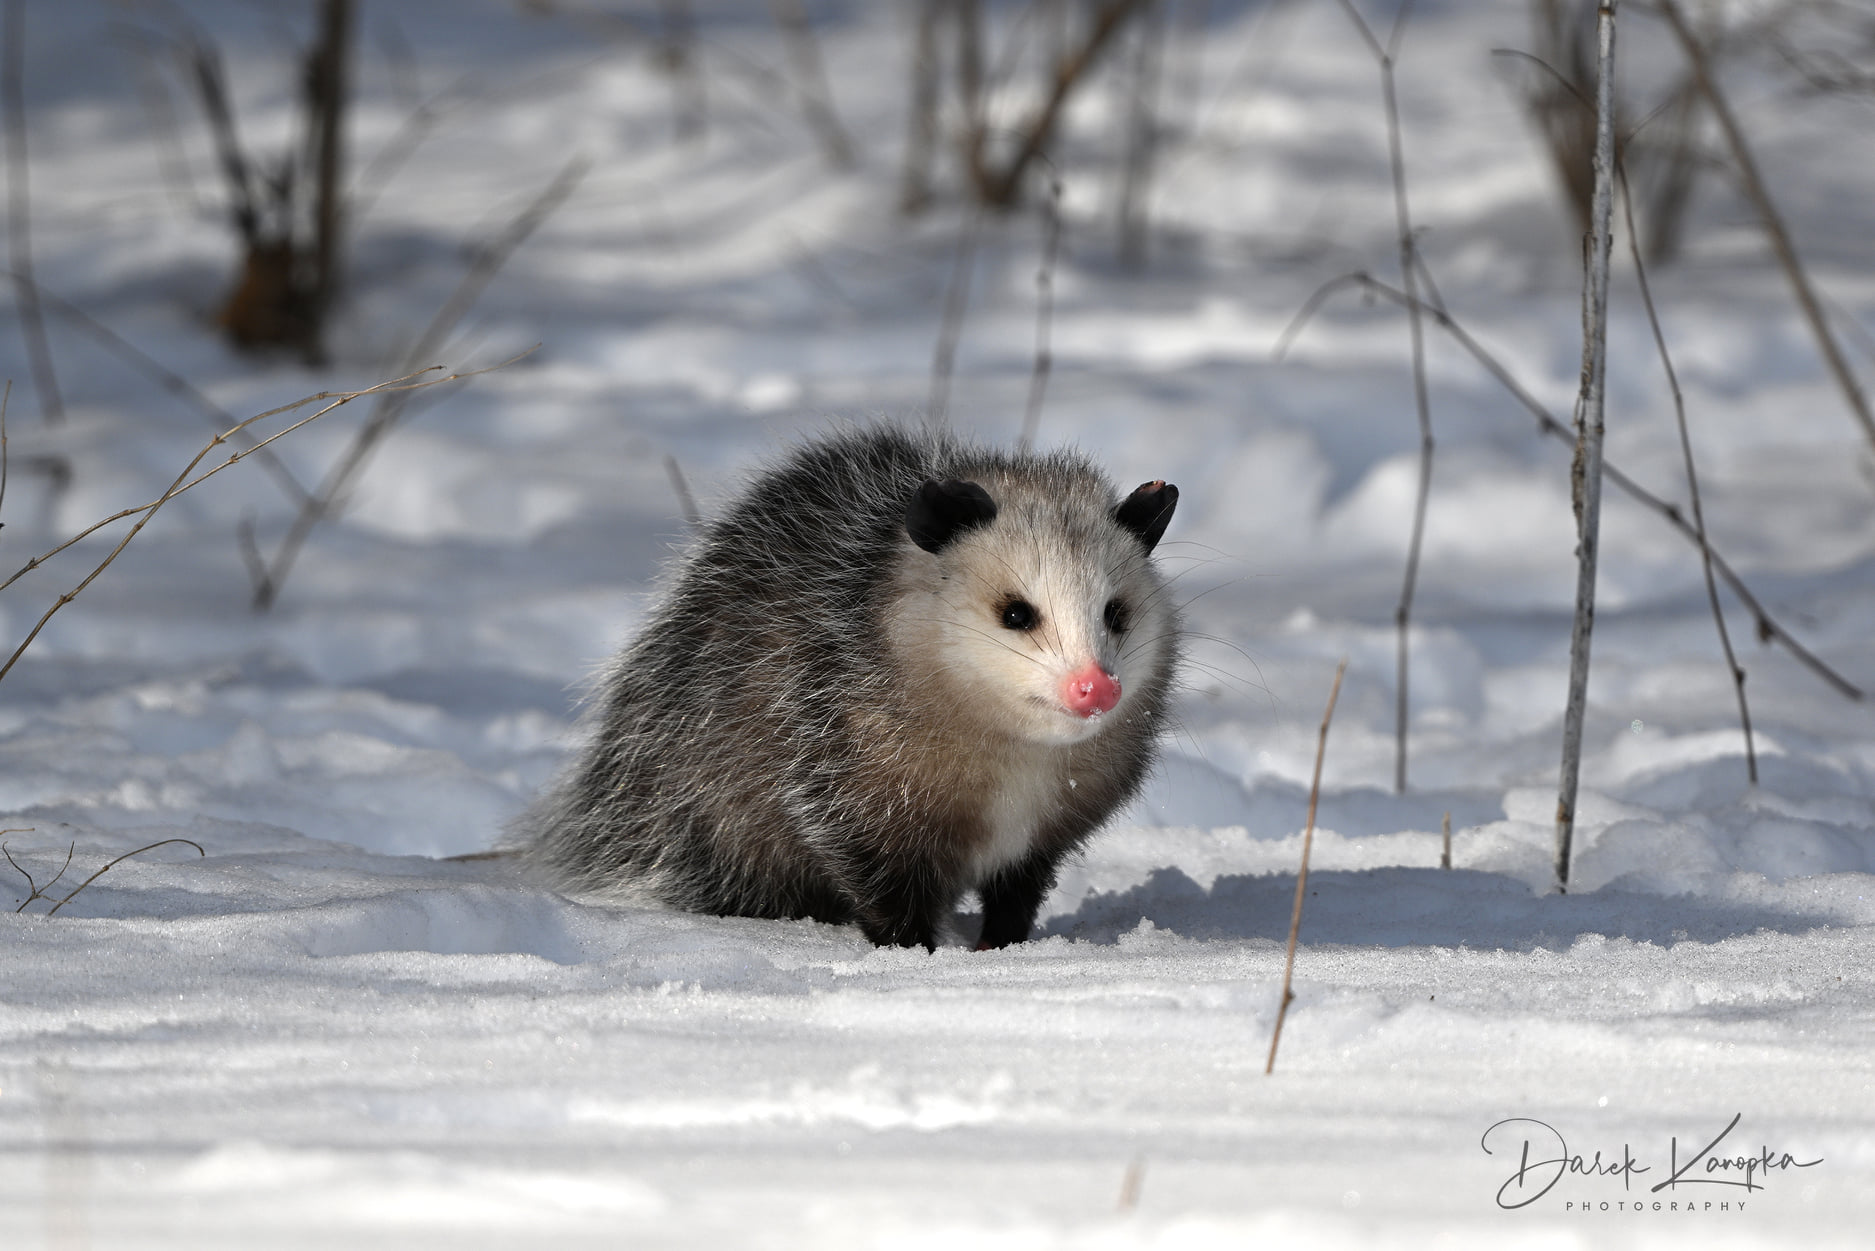 An opossum walking through a snow-covered field.